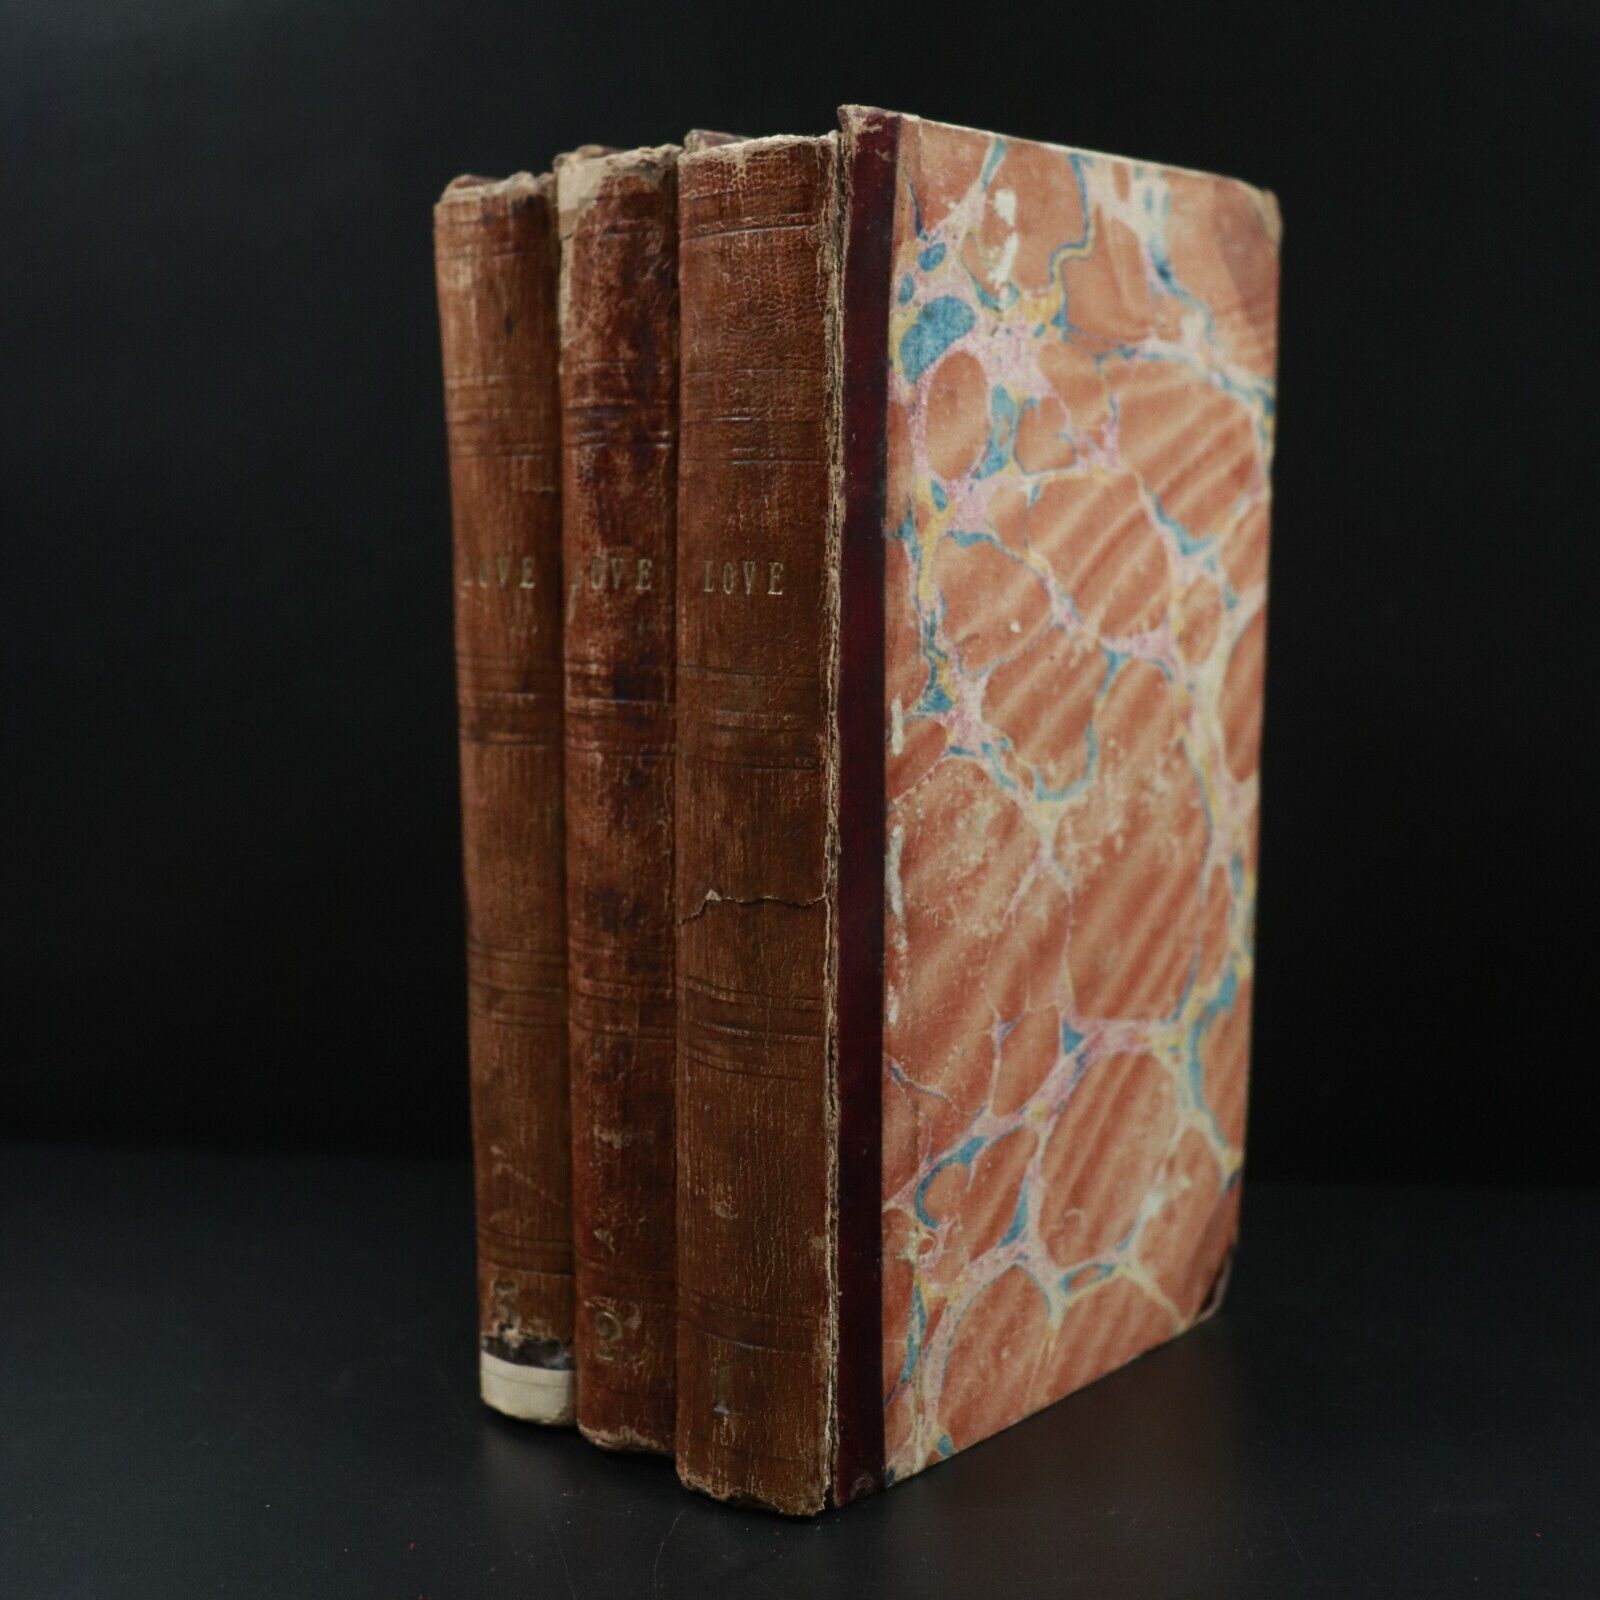 1841 3vol  "Love" by Lady Charlotte Bury Antiquarian British Fiction Book Set